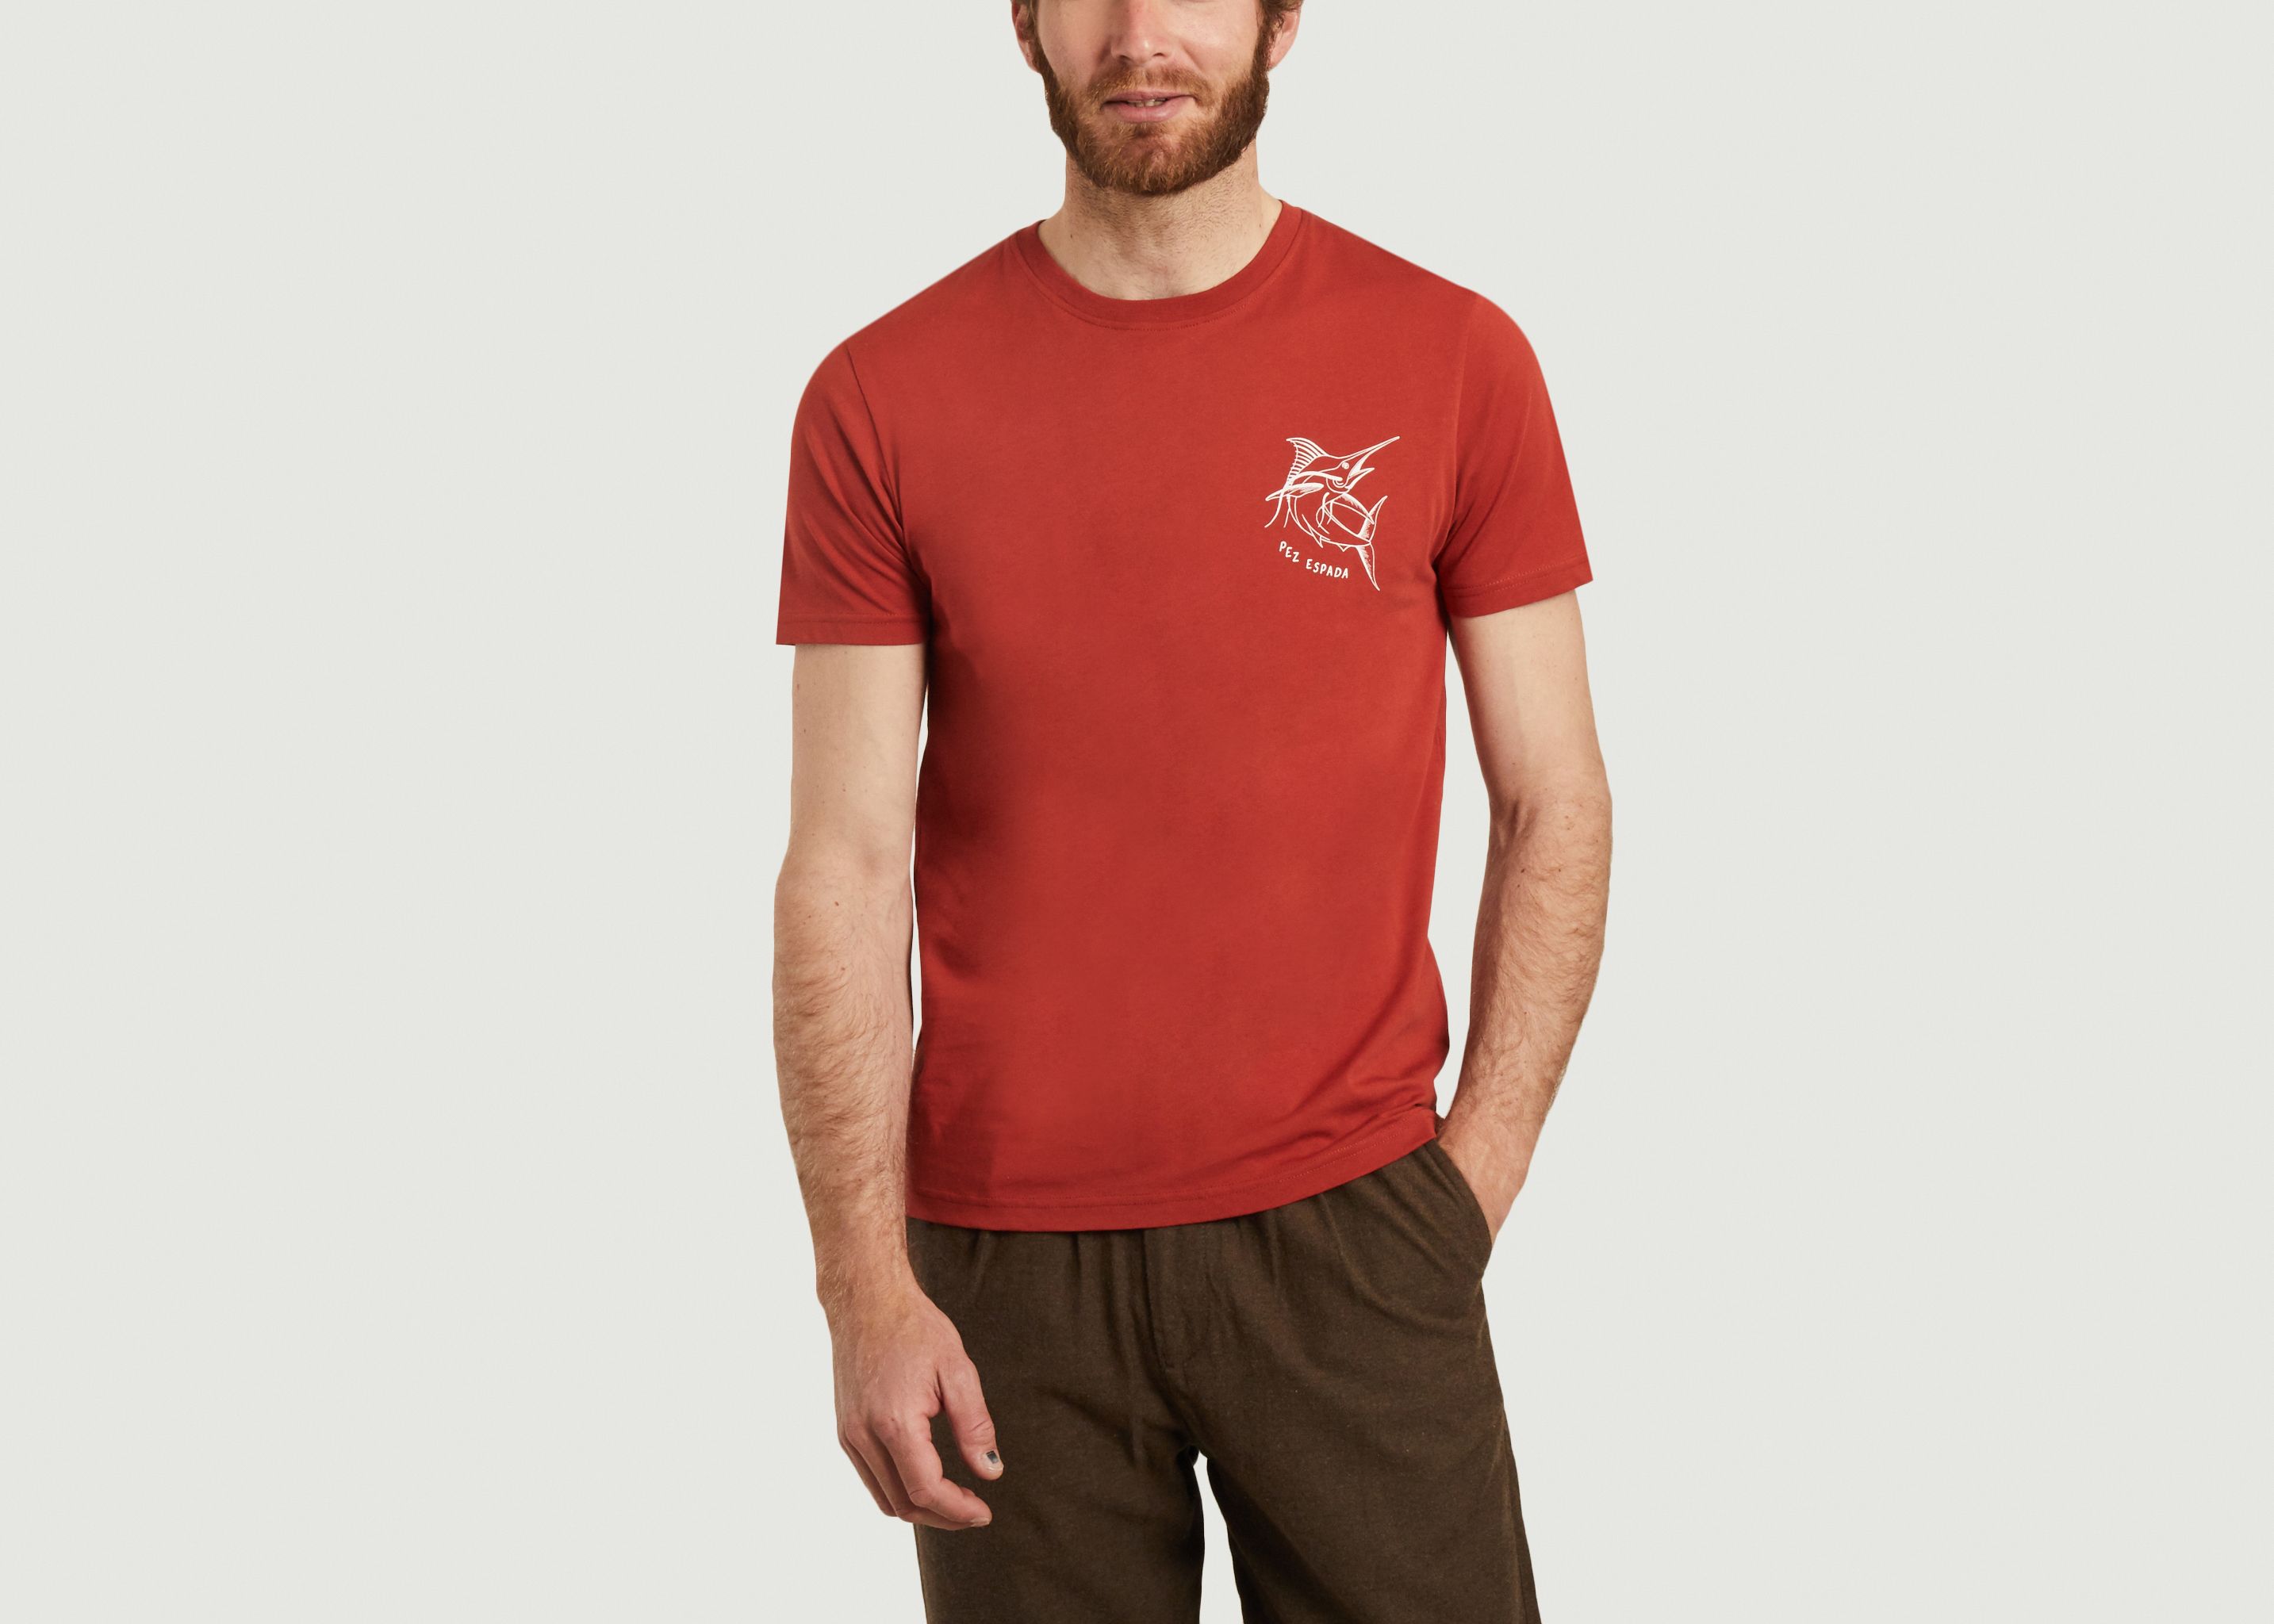 Pez Espada T-Shirt aus Bio-Baumwolle - Olow